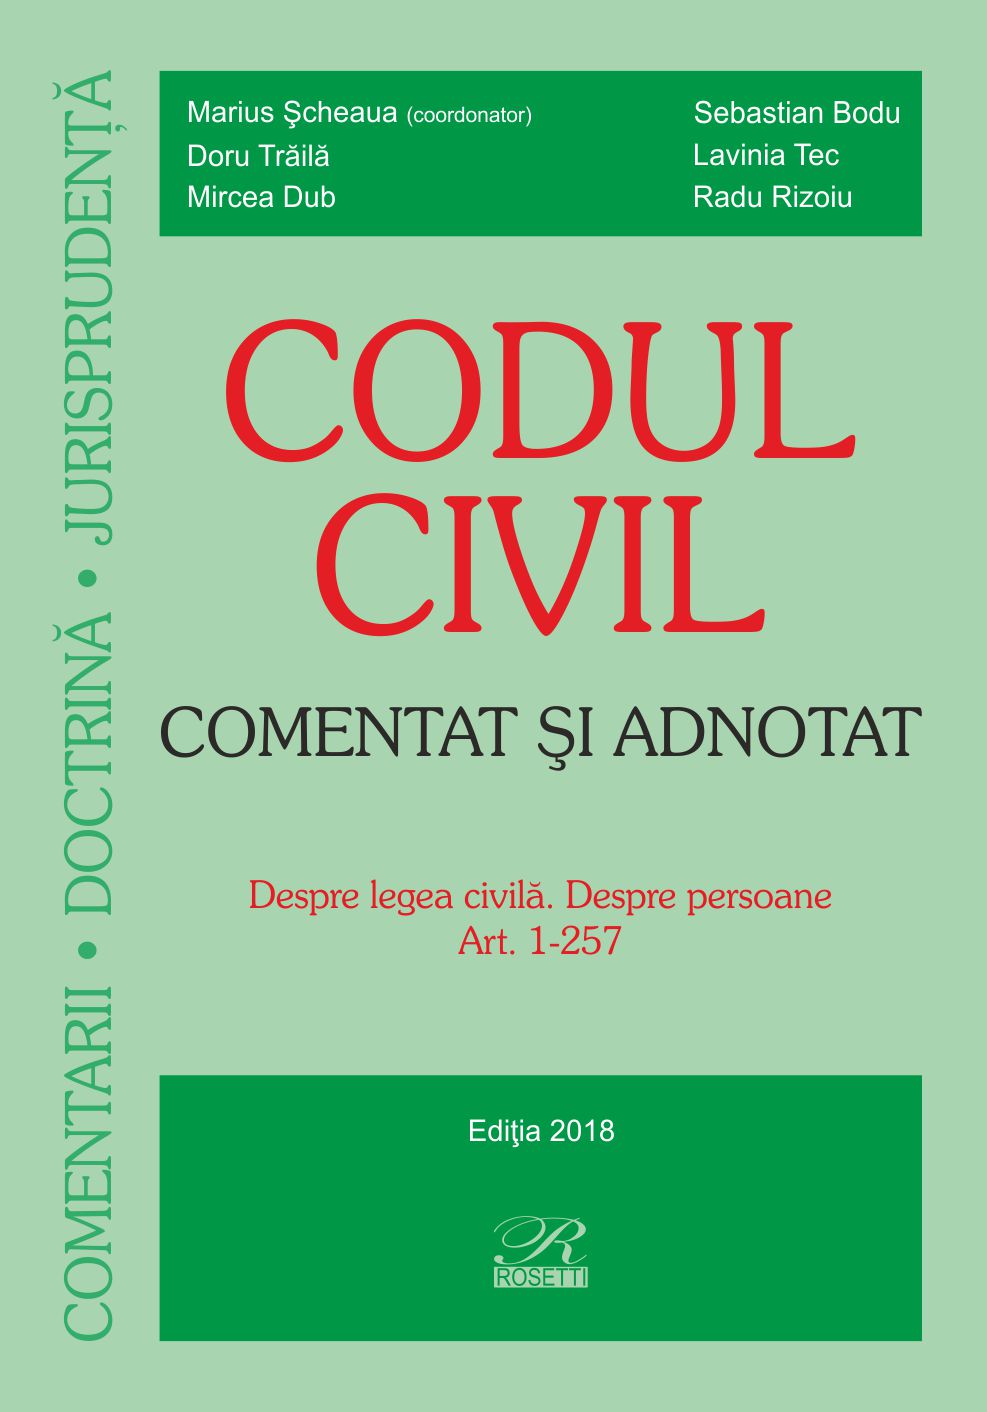 Codul civil – Comentat si adnotat | Marius Scheaua, Radu Rizoiu, Sebastian Bodu, Doru Traila, Mircea Dub, Lavinia Tec